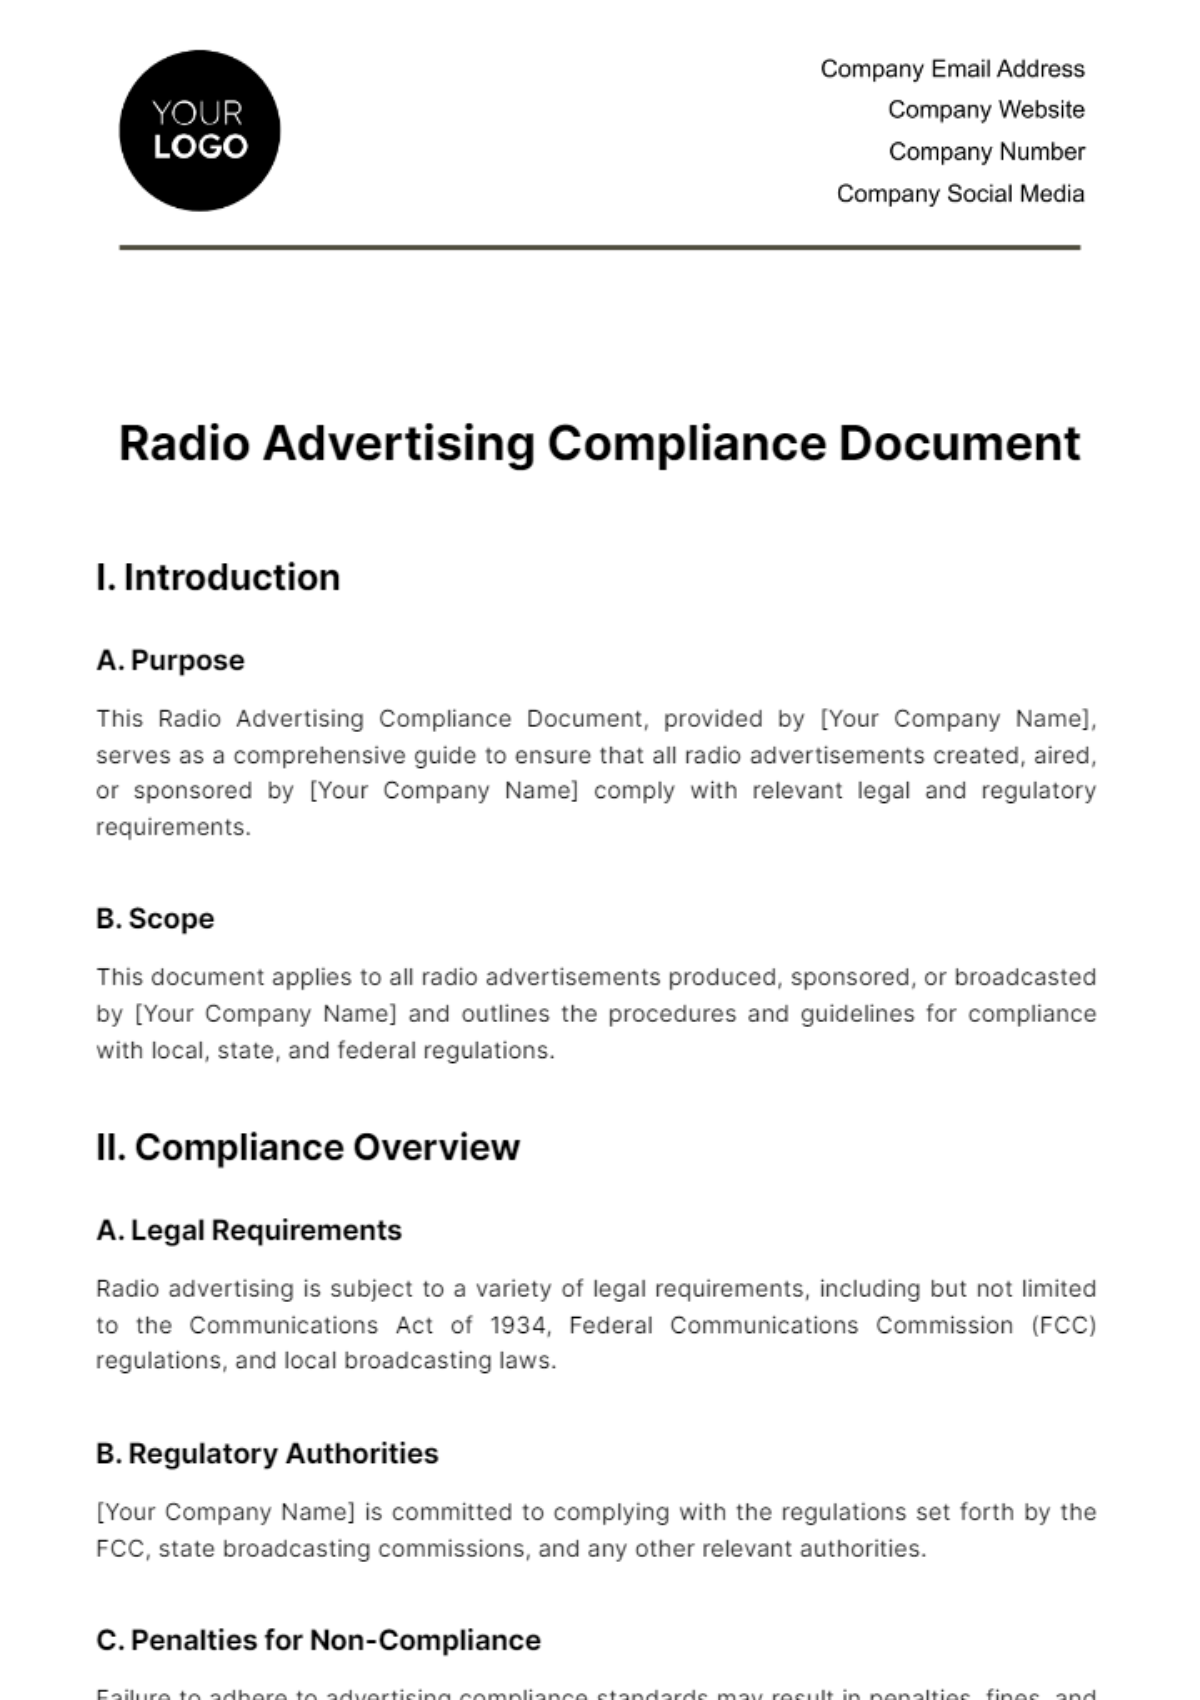 Radio Advertising Compliance Document Template